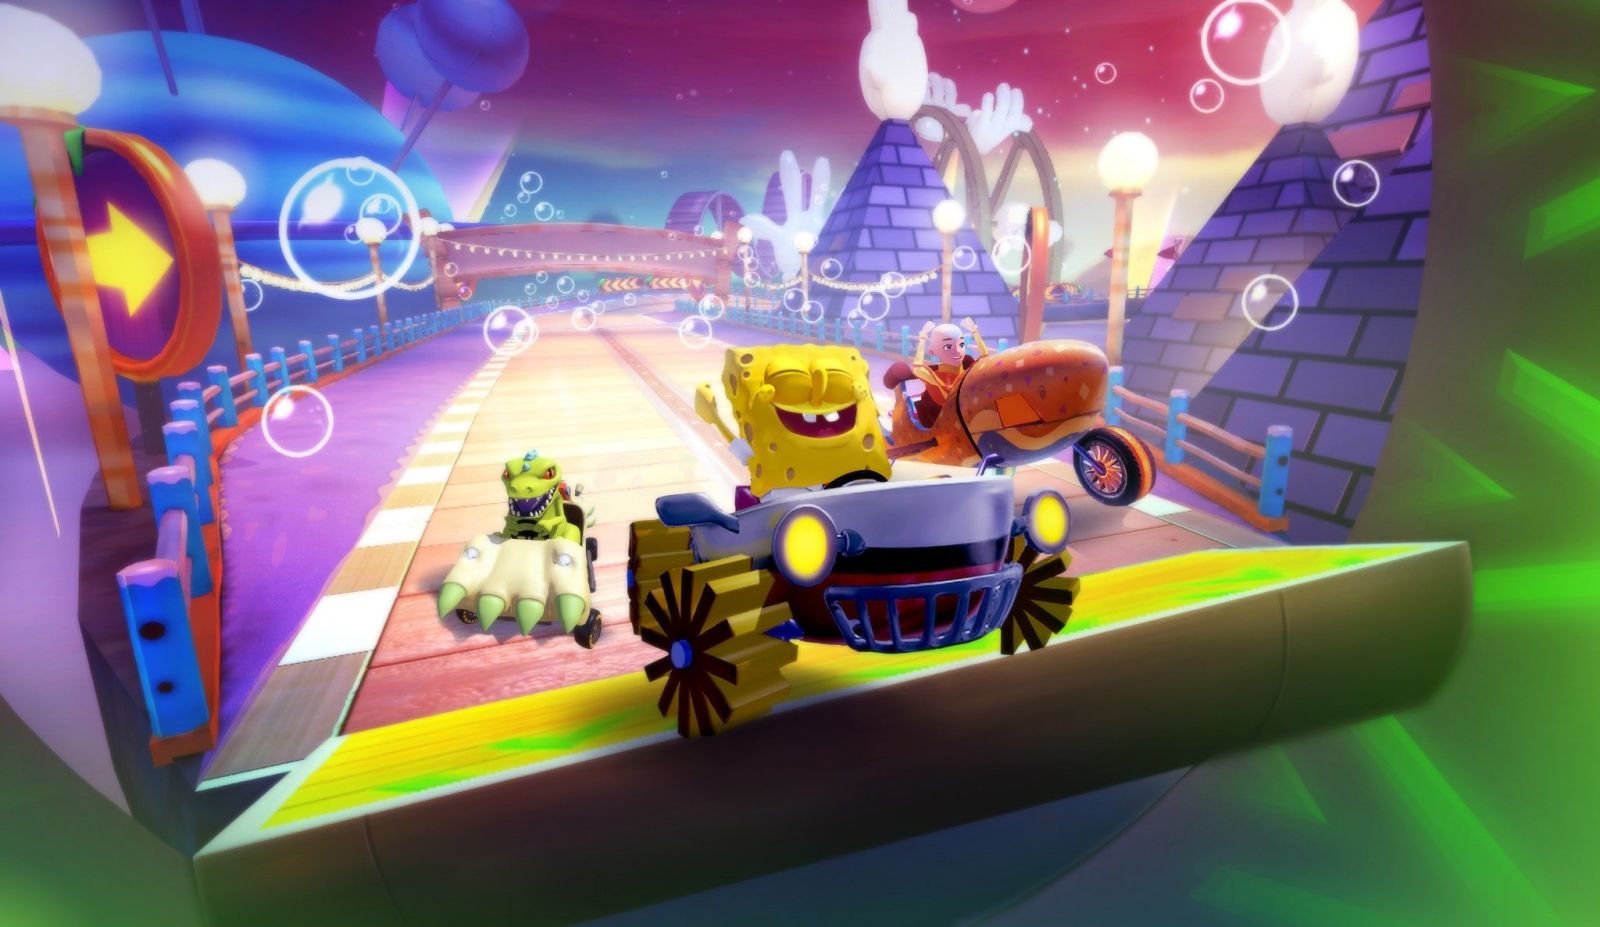 Nickelodeon Kart Racers 2: Grand Prix (PS4)